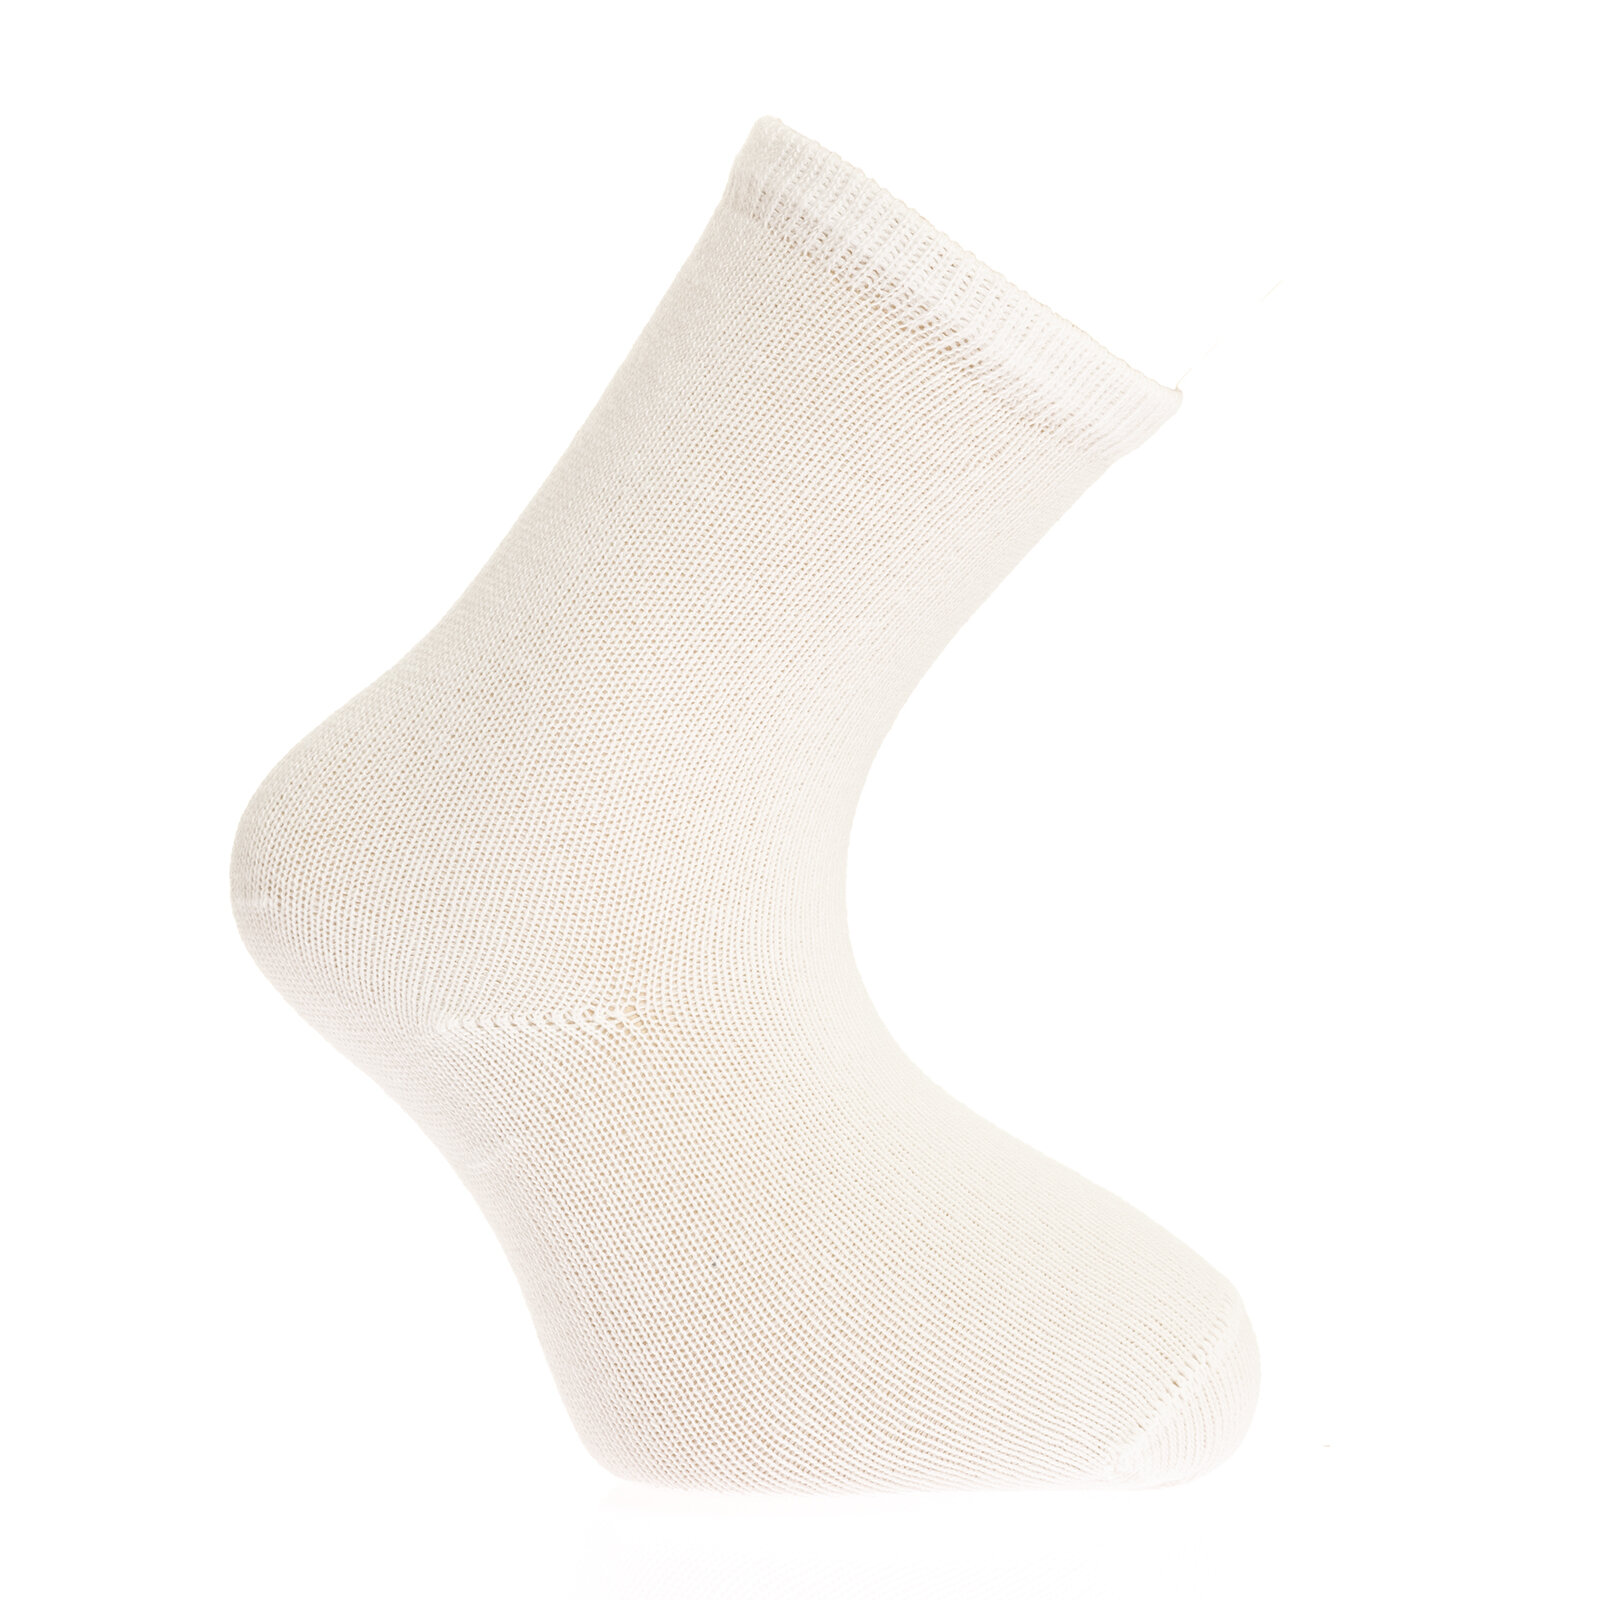 Düz 2'li Organik Çorap Erkek Bebek